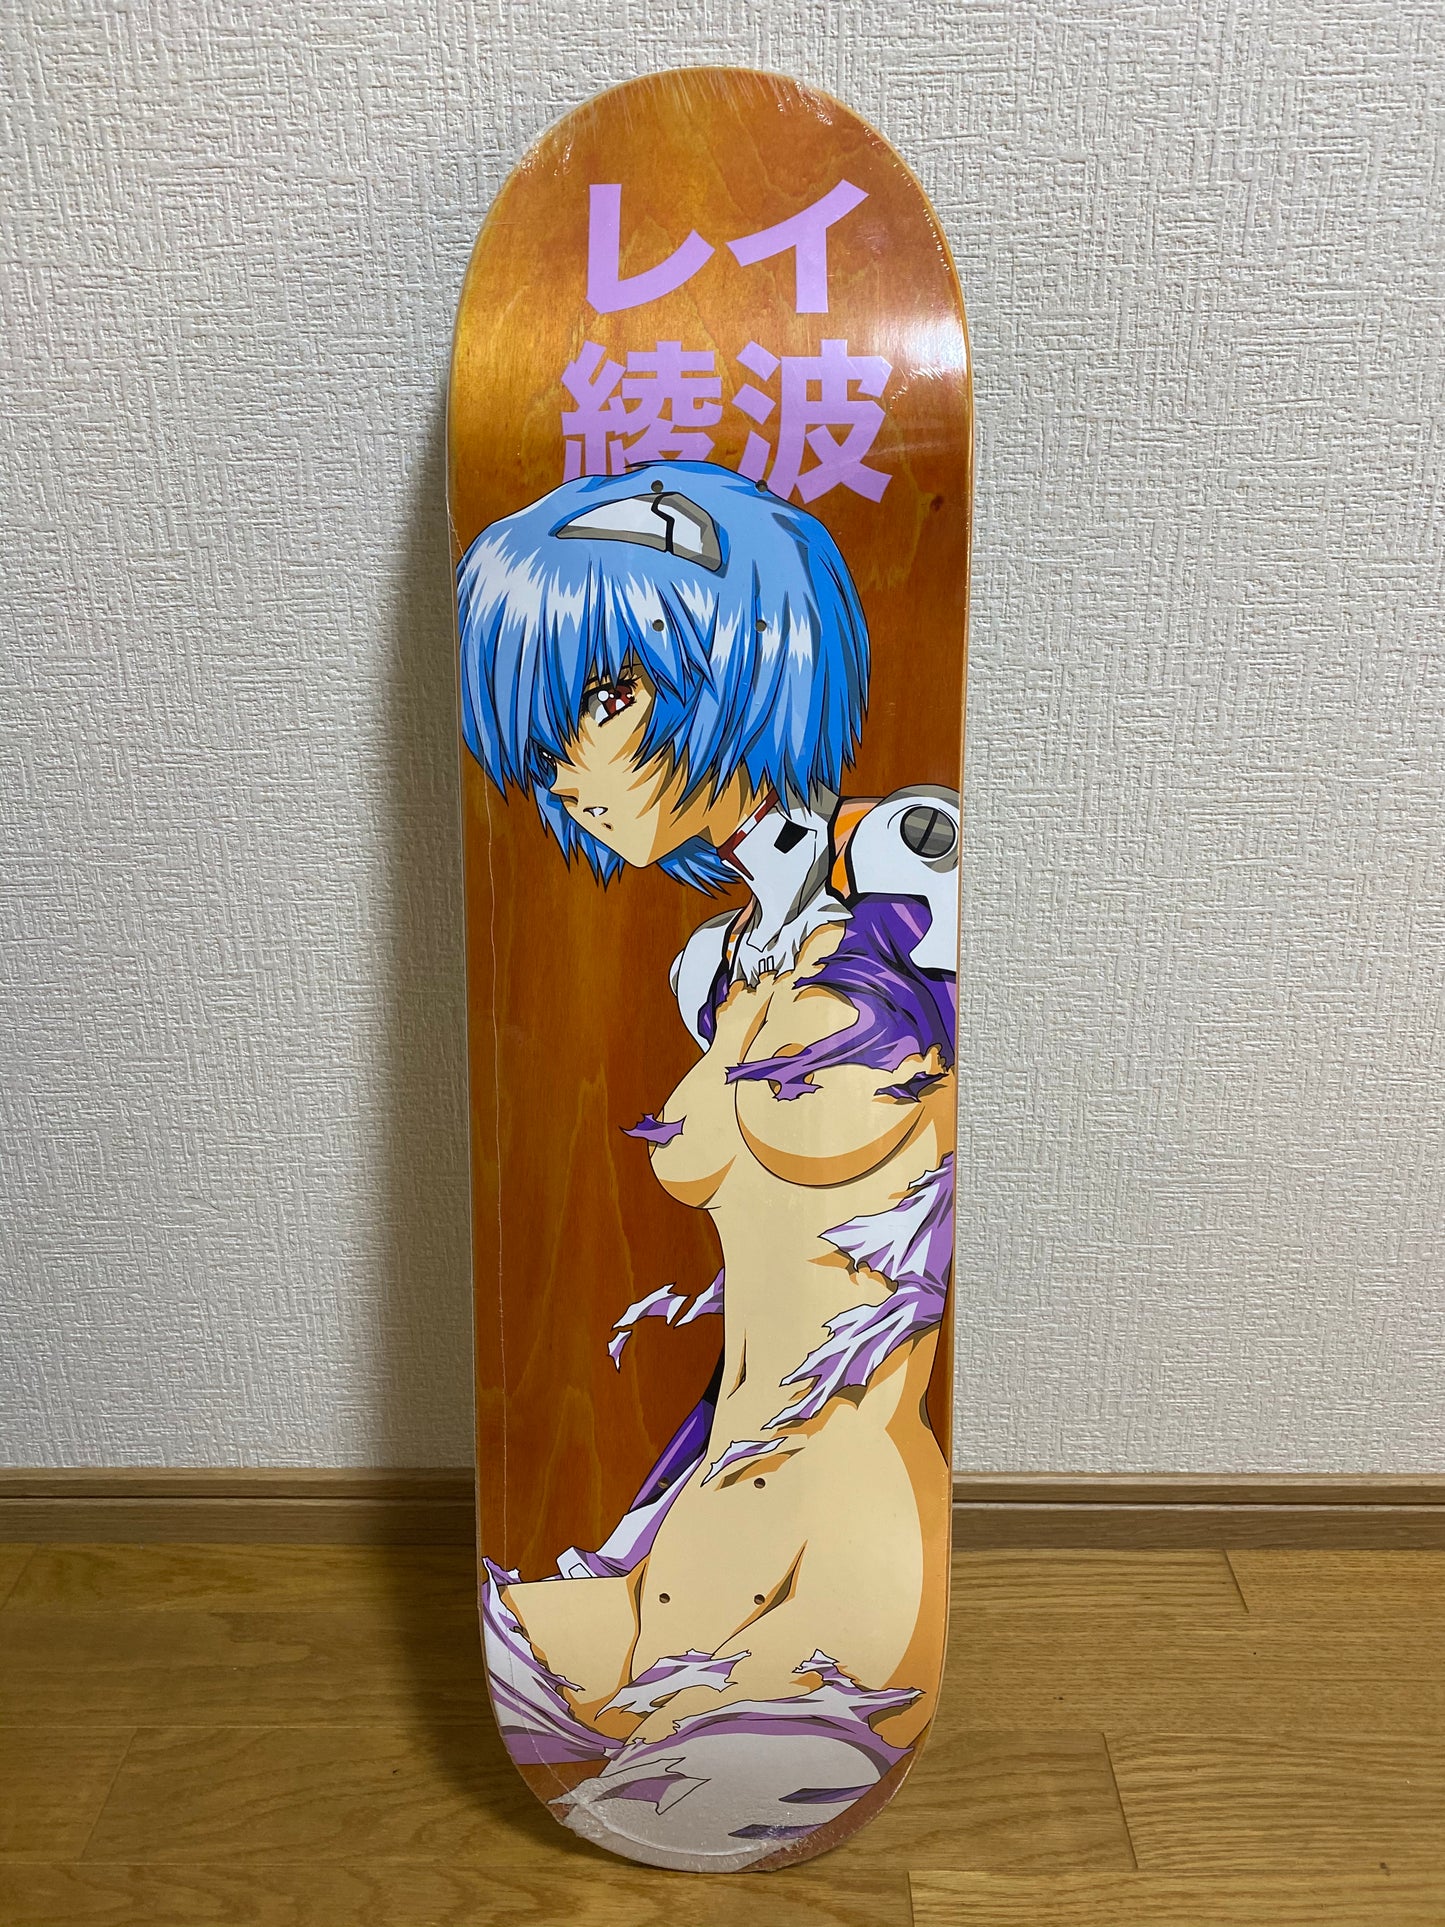 Hook Ups Japanese School Girl Henta Evangelion Nude Aska Ayanami Rei Erotica Erotic Skateboard Deck Set